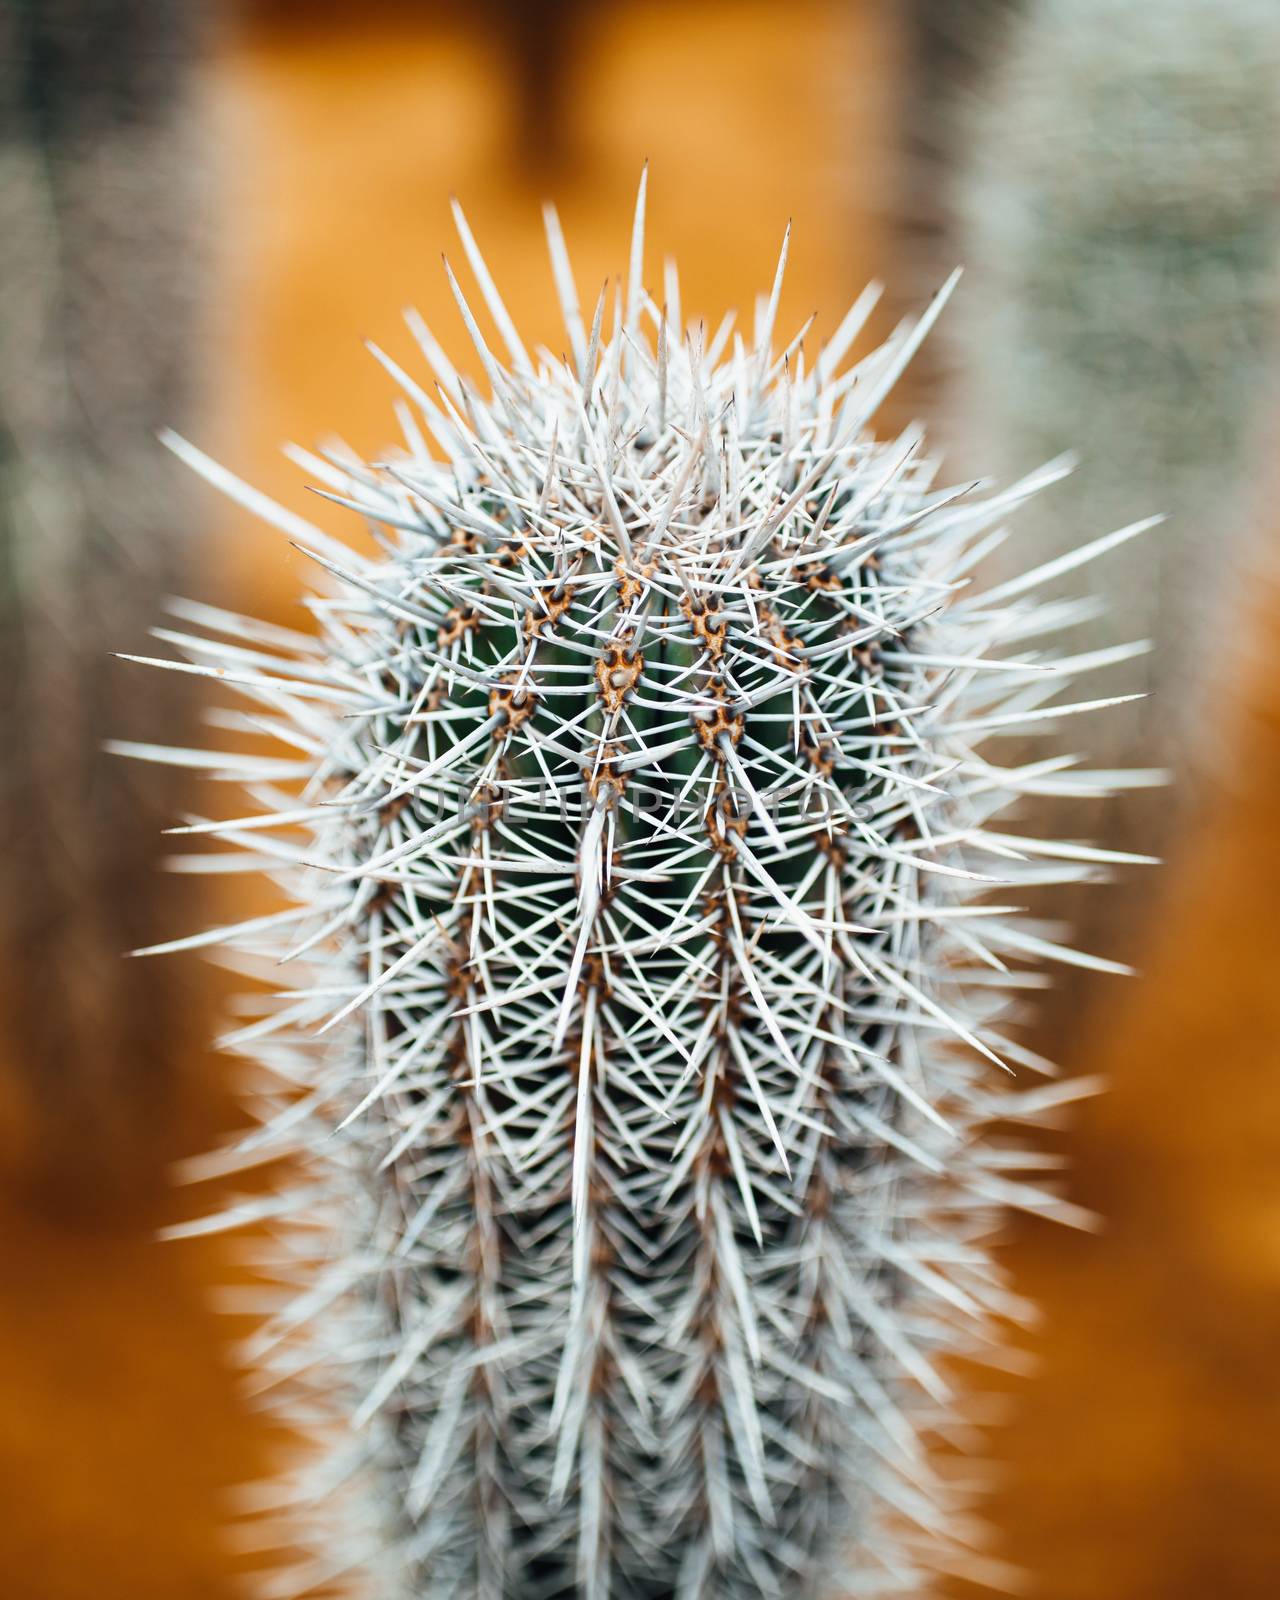 huge cactus thorns, closeup view by nikkytok